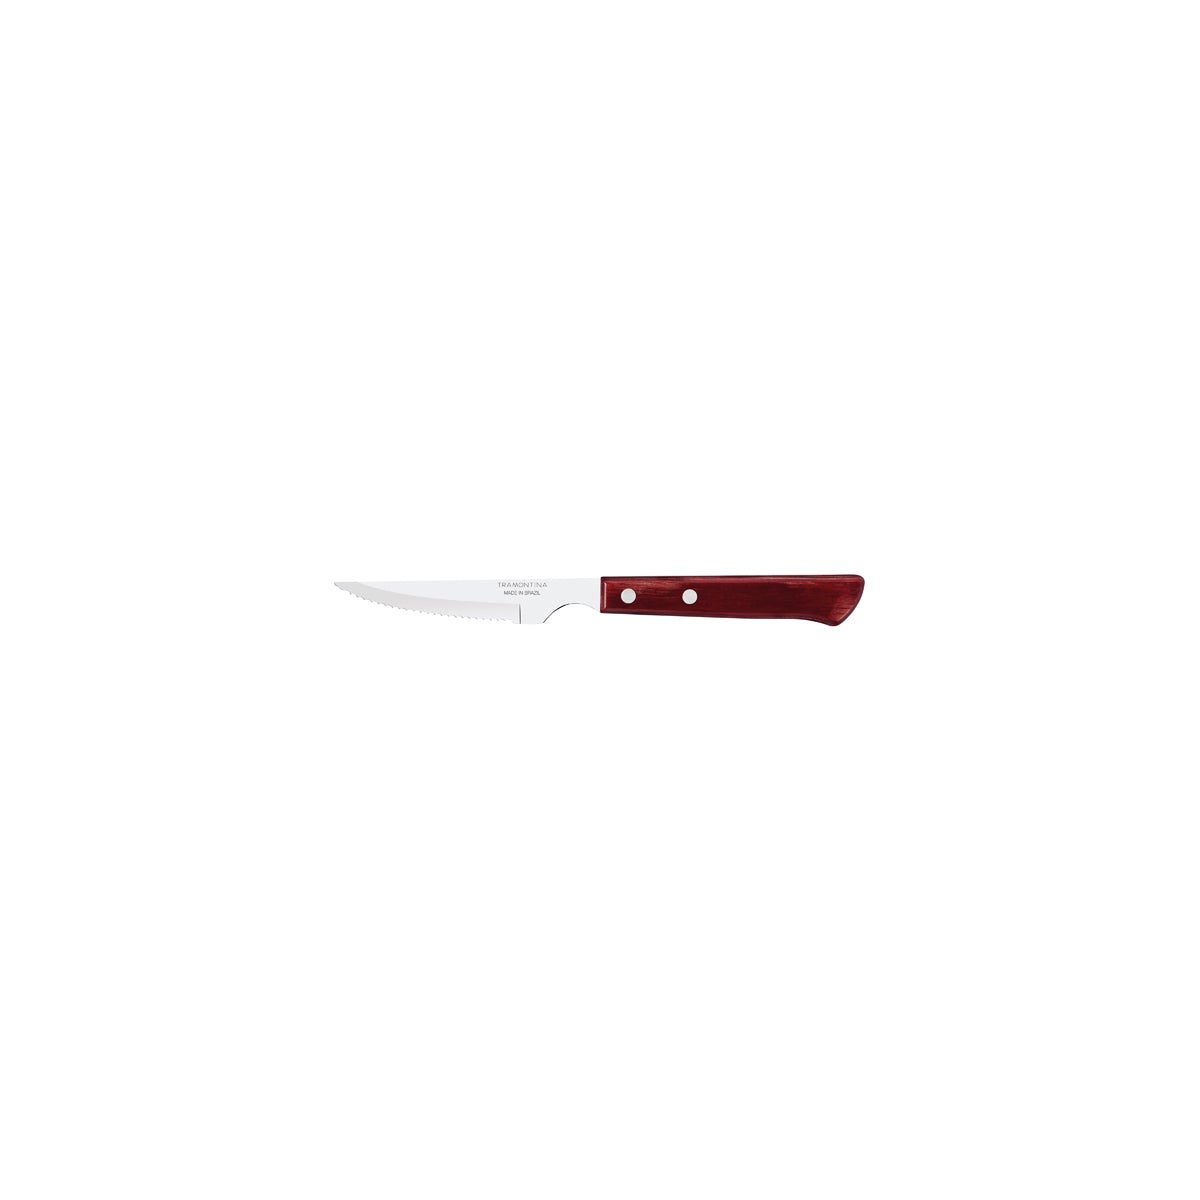 TM21109/074 Tramontina Churrasco Steak Knife Serrated Narrow Blade with Polywood Handle Red 102mm Tomkin Australia Hospitality Supplies